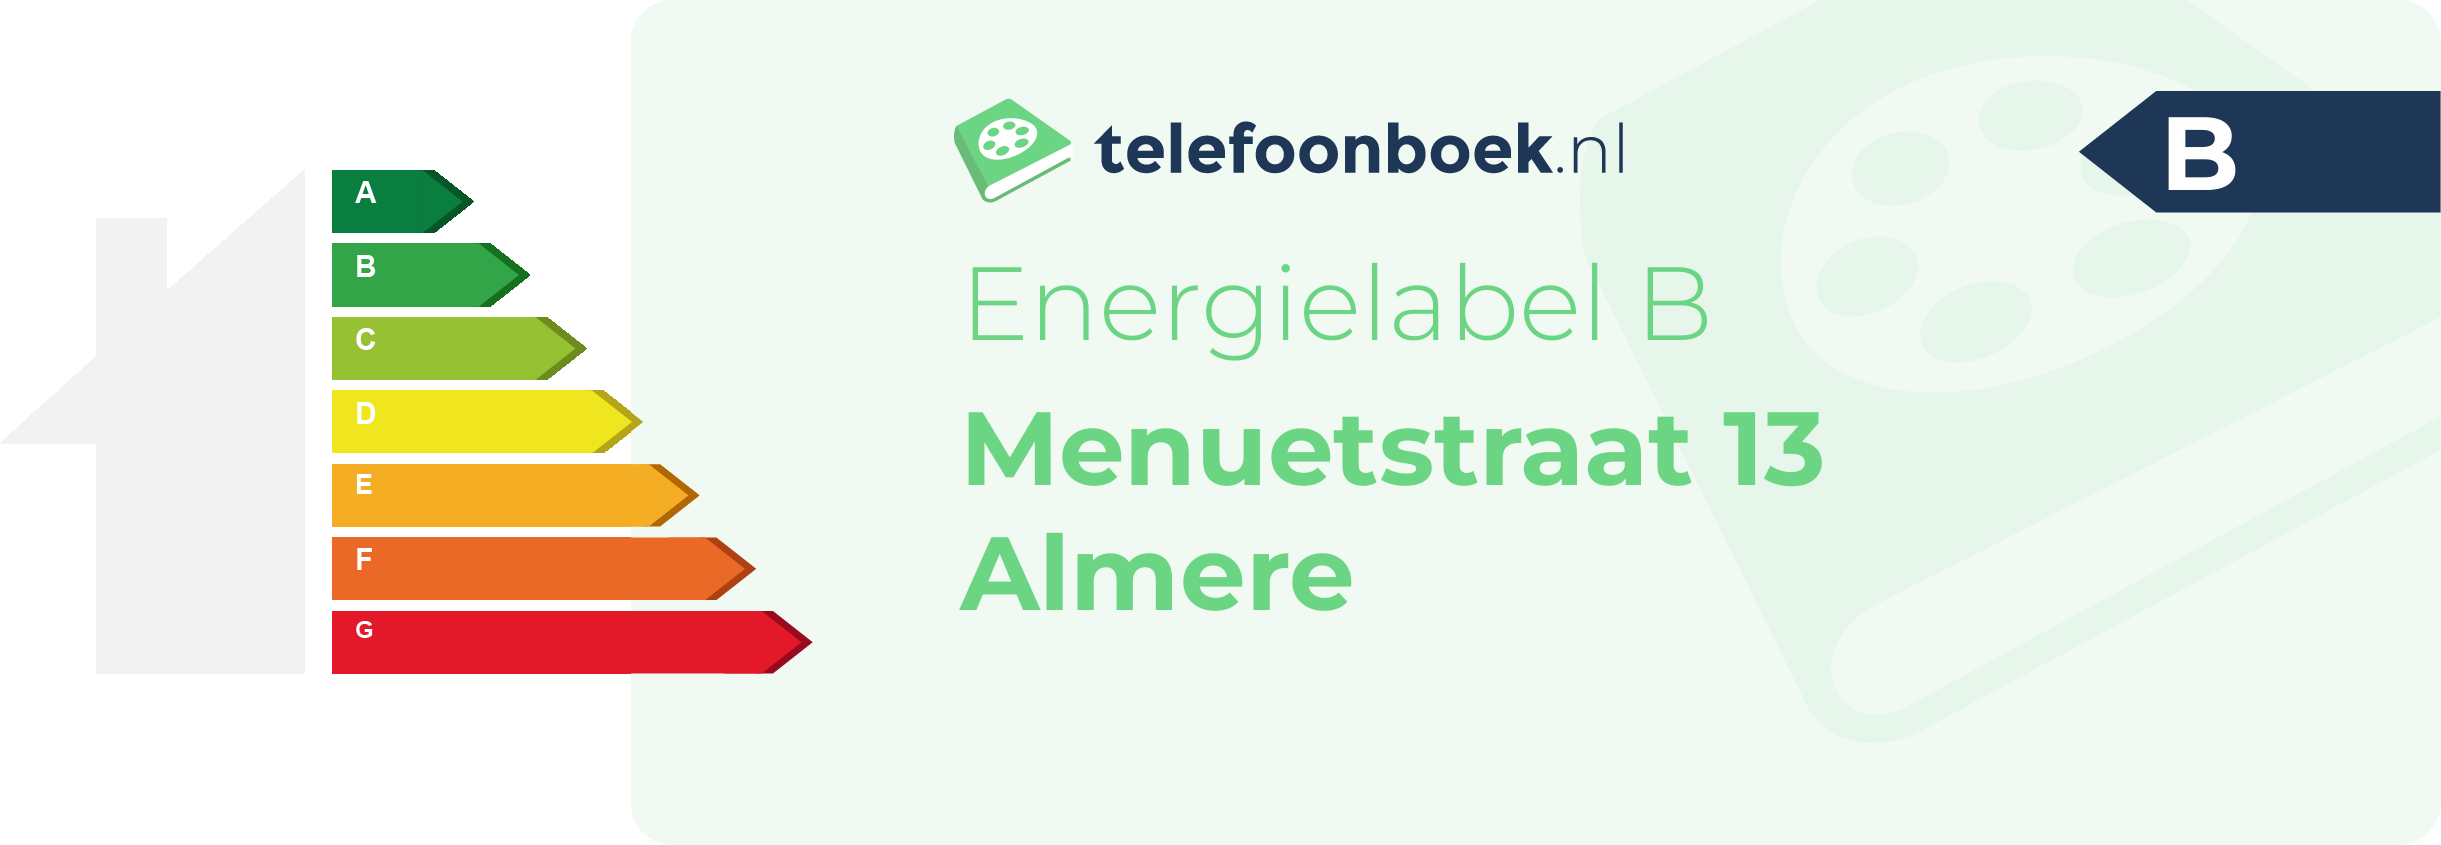 Energielabel Menuetstraat 13 Almere